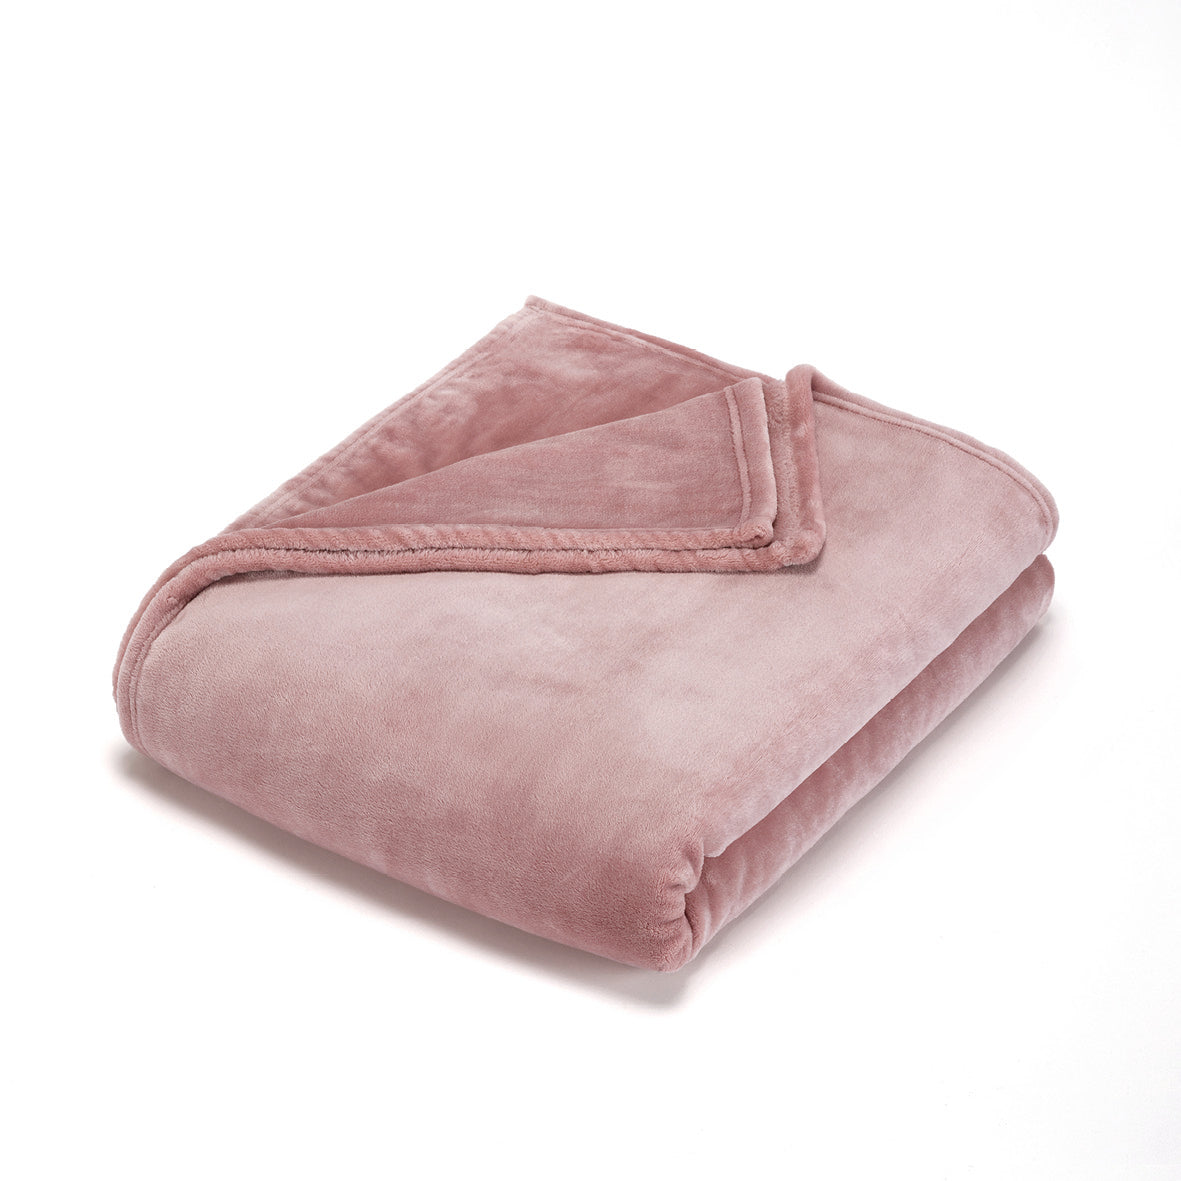 Light Vipshopboutic plaid – Fleece pink